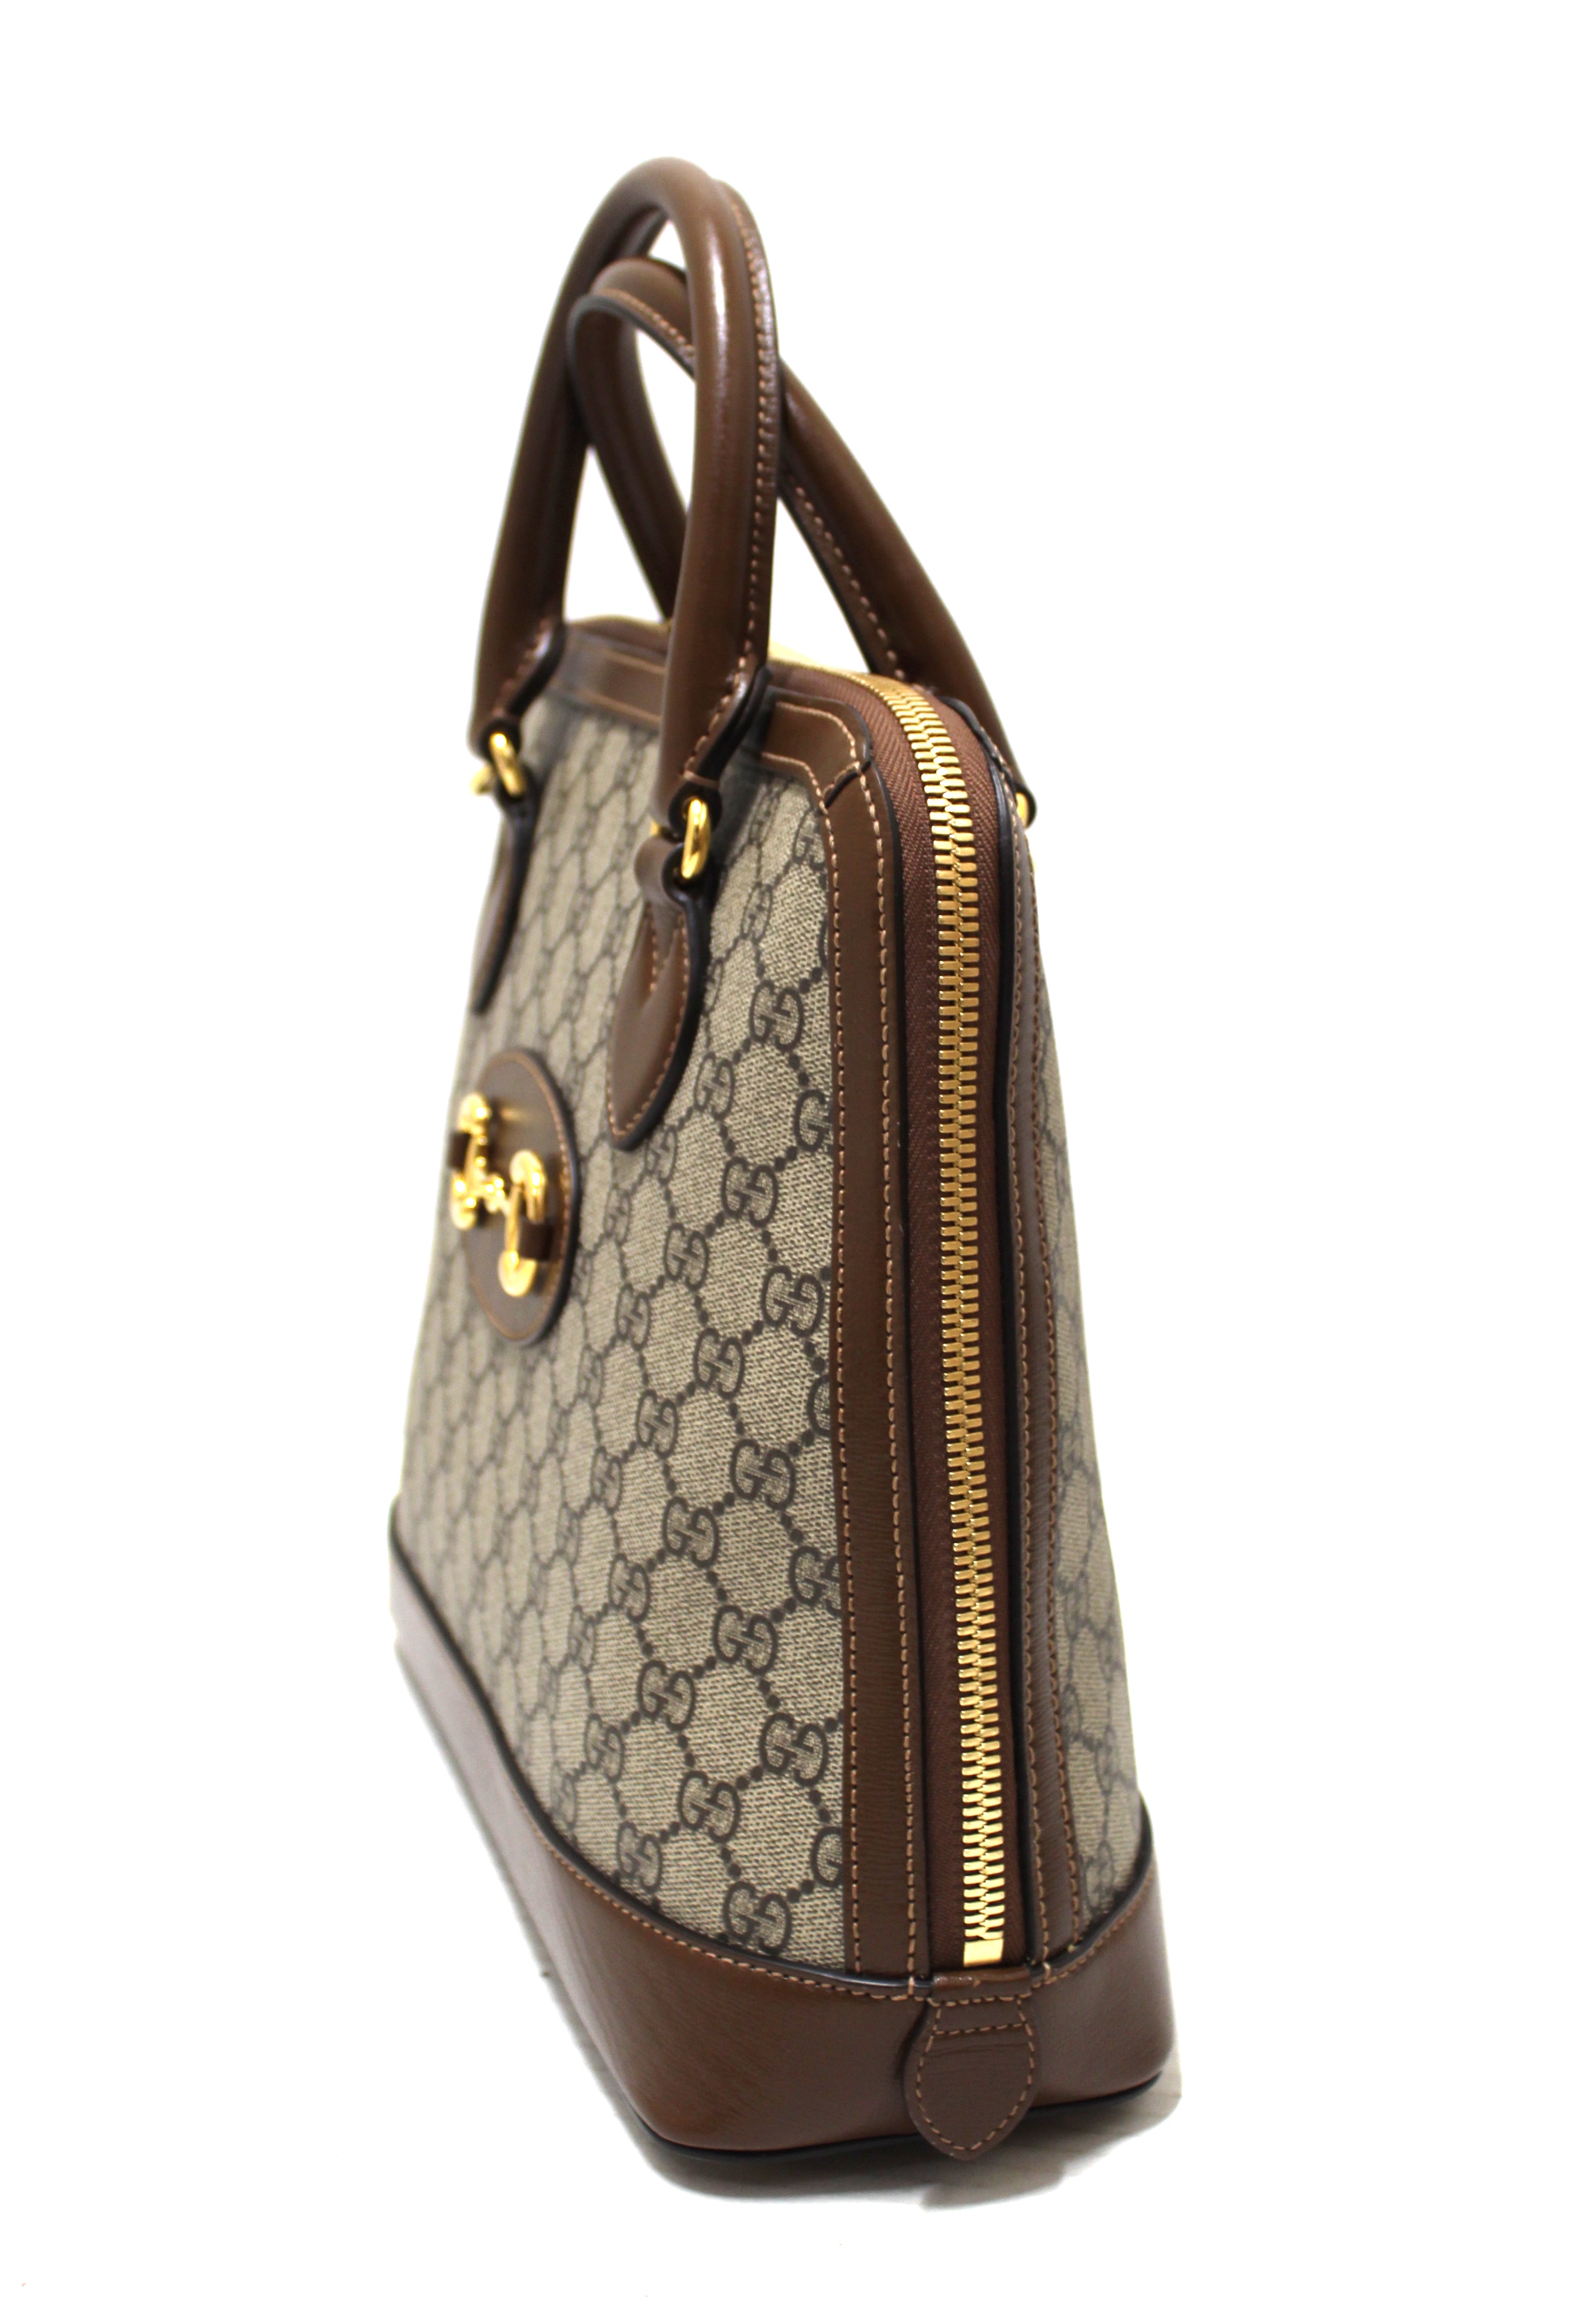 Authentic Gucci Brown Classic GG Supreme Horsebit 1955 Top Handle Bag